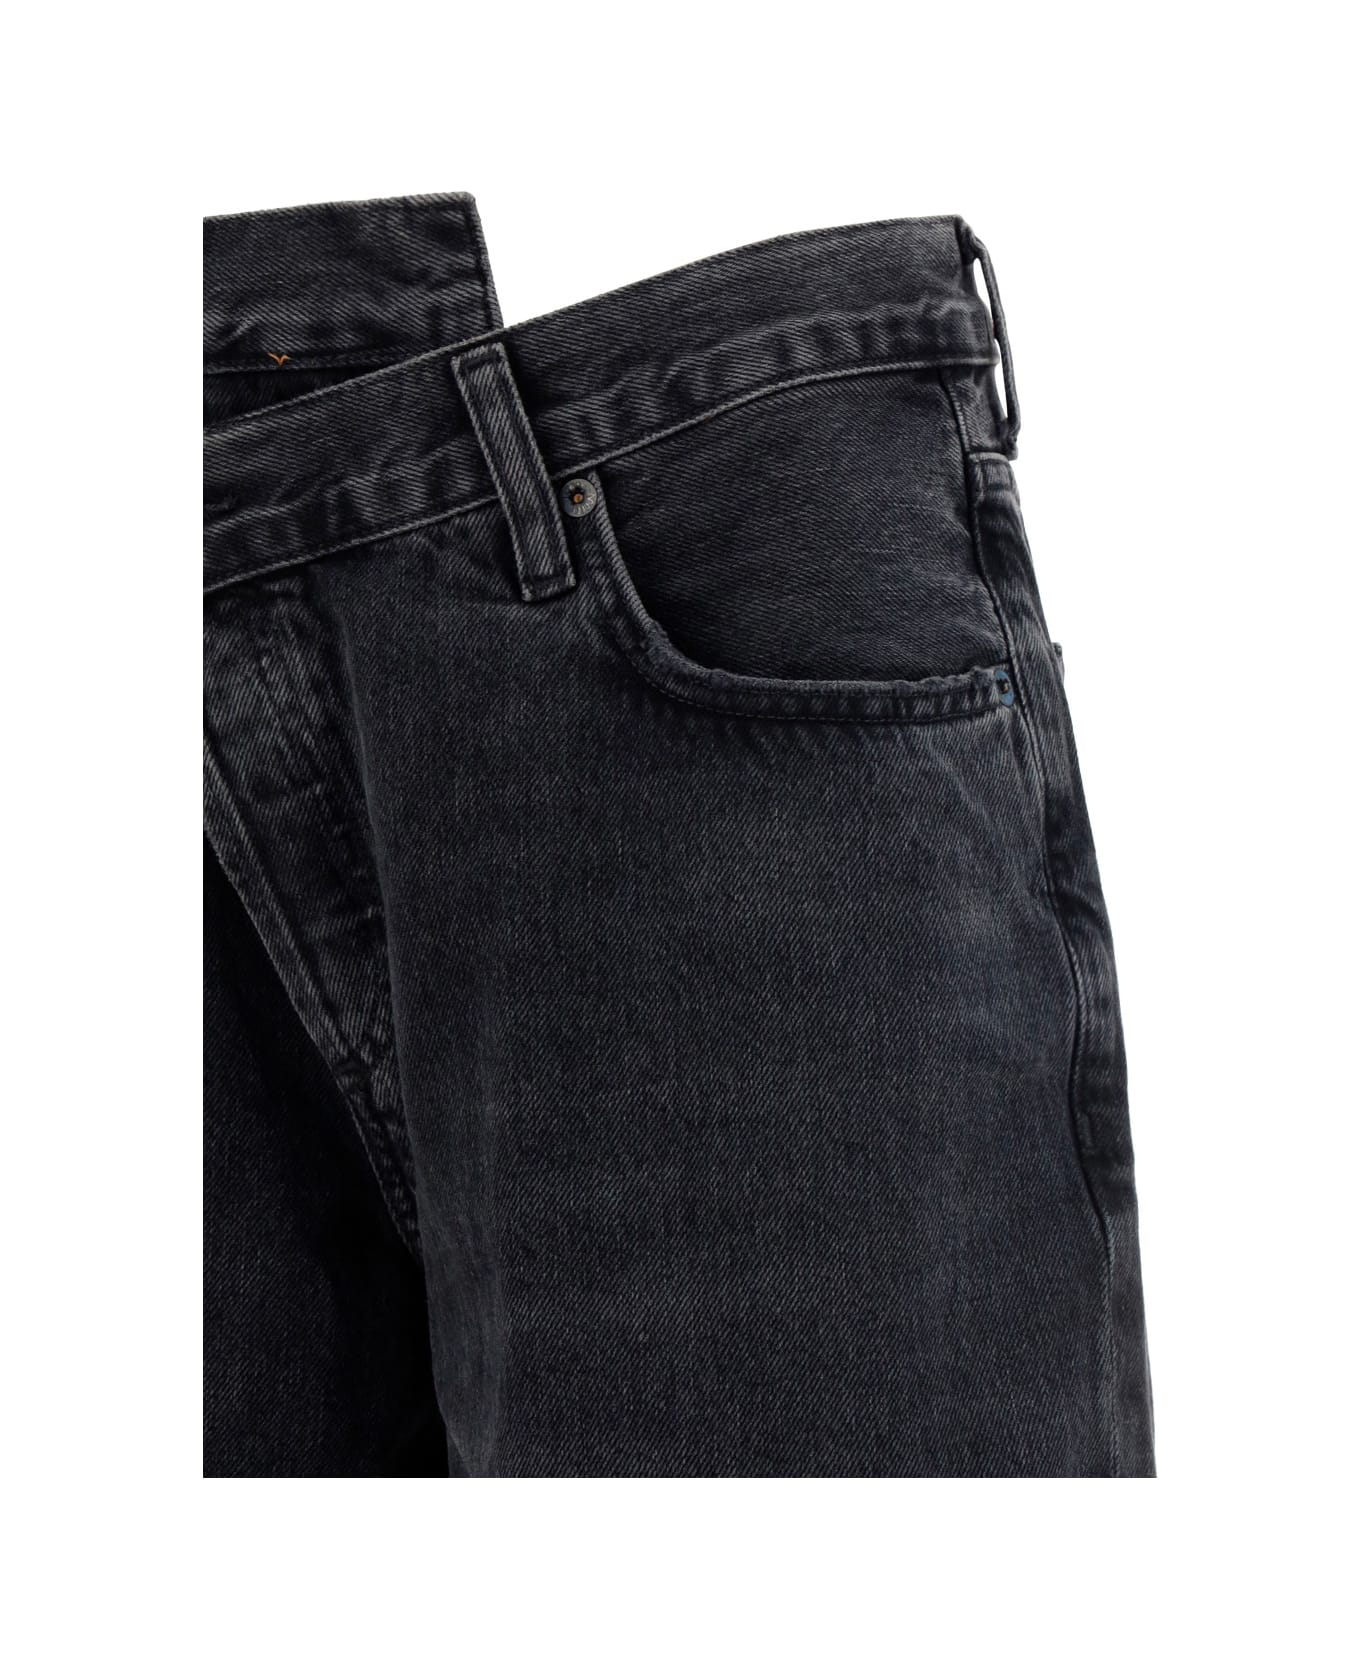 AGOLDE Jeans - Black デニム